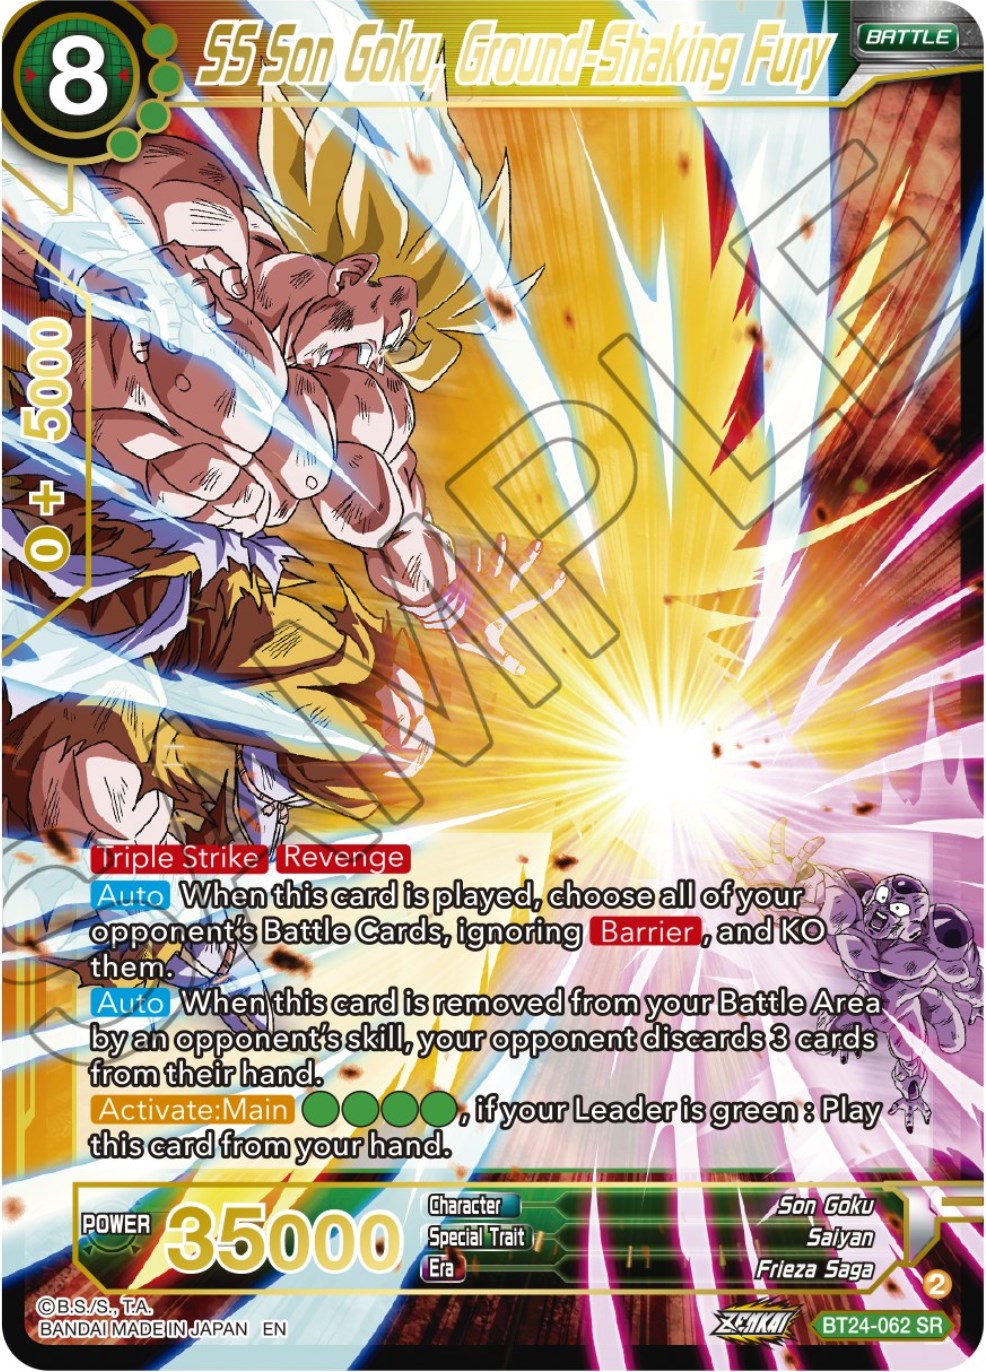 SS Son Goku, Ground-Shaking Fury (BT24-062) [Beyond Generations] | Amazing Games TCG